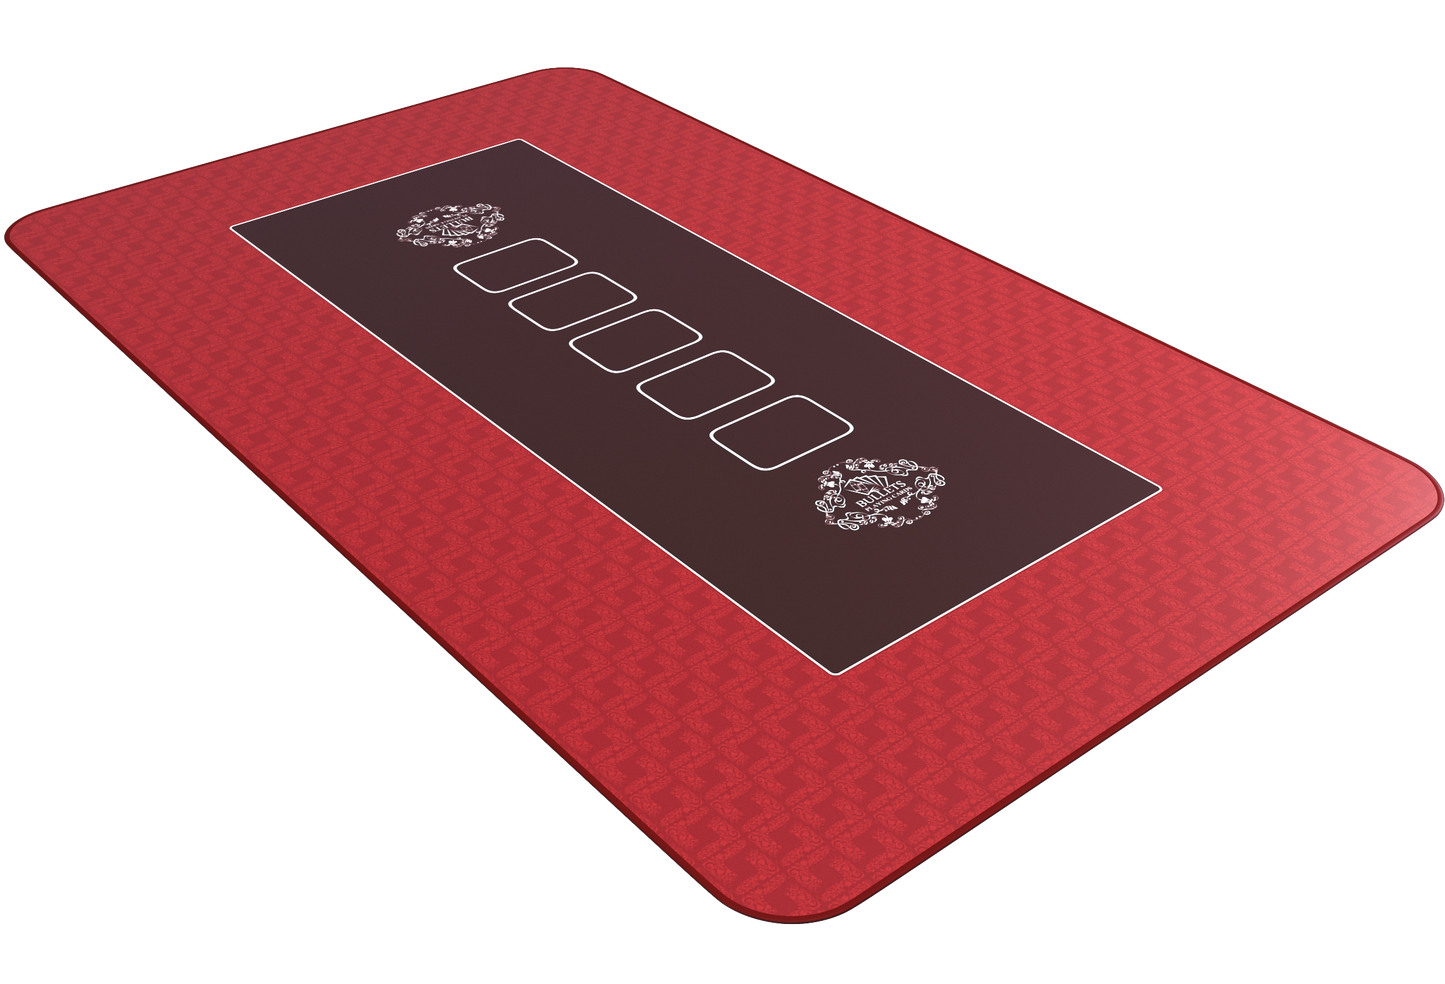 Poker mat 100x60 cm, square